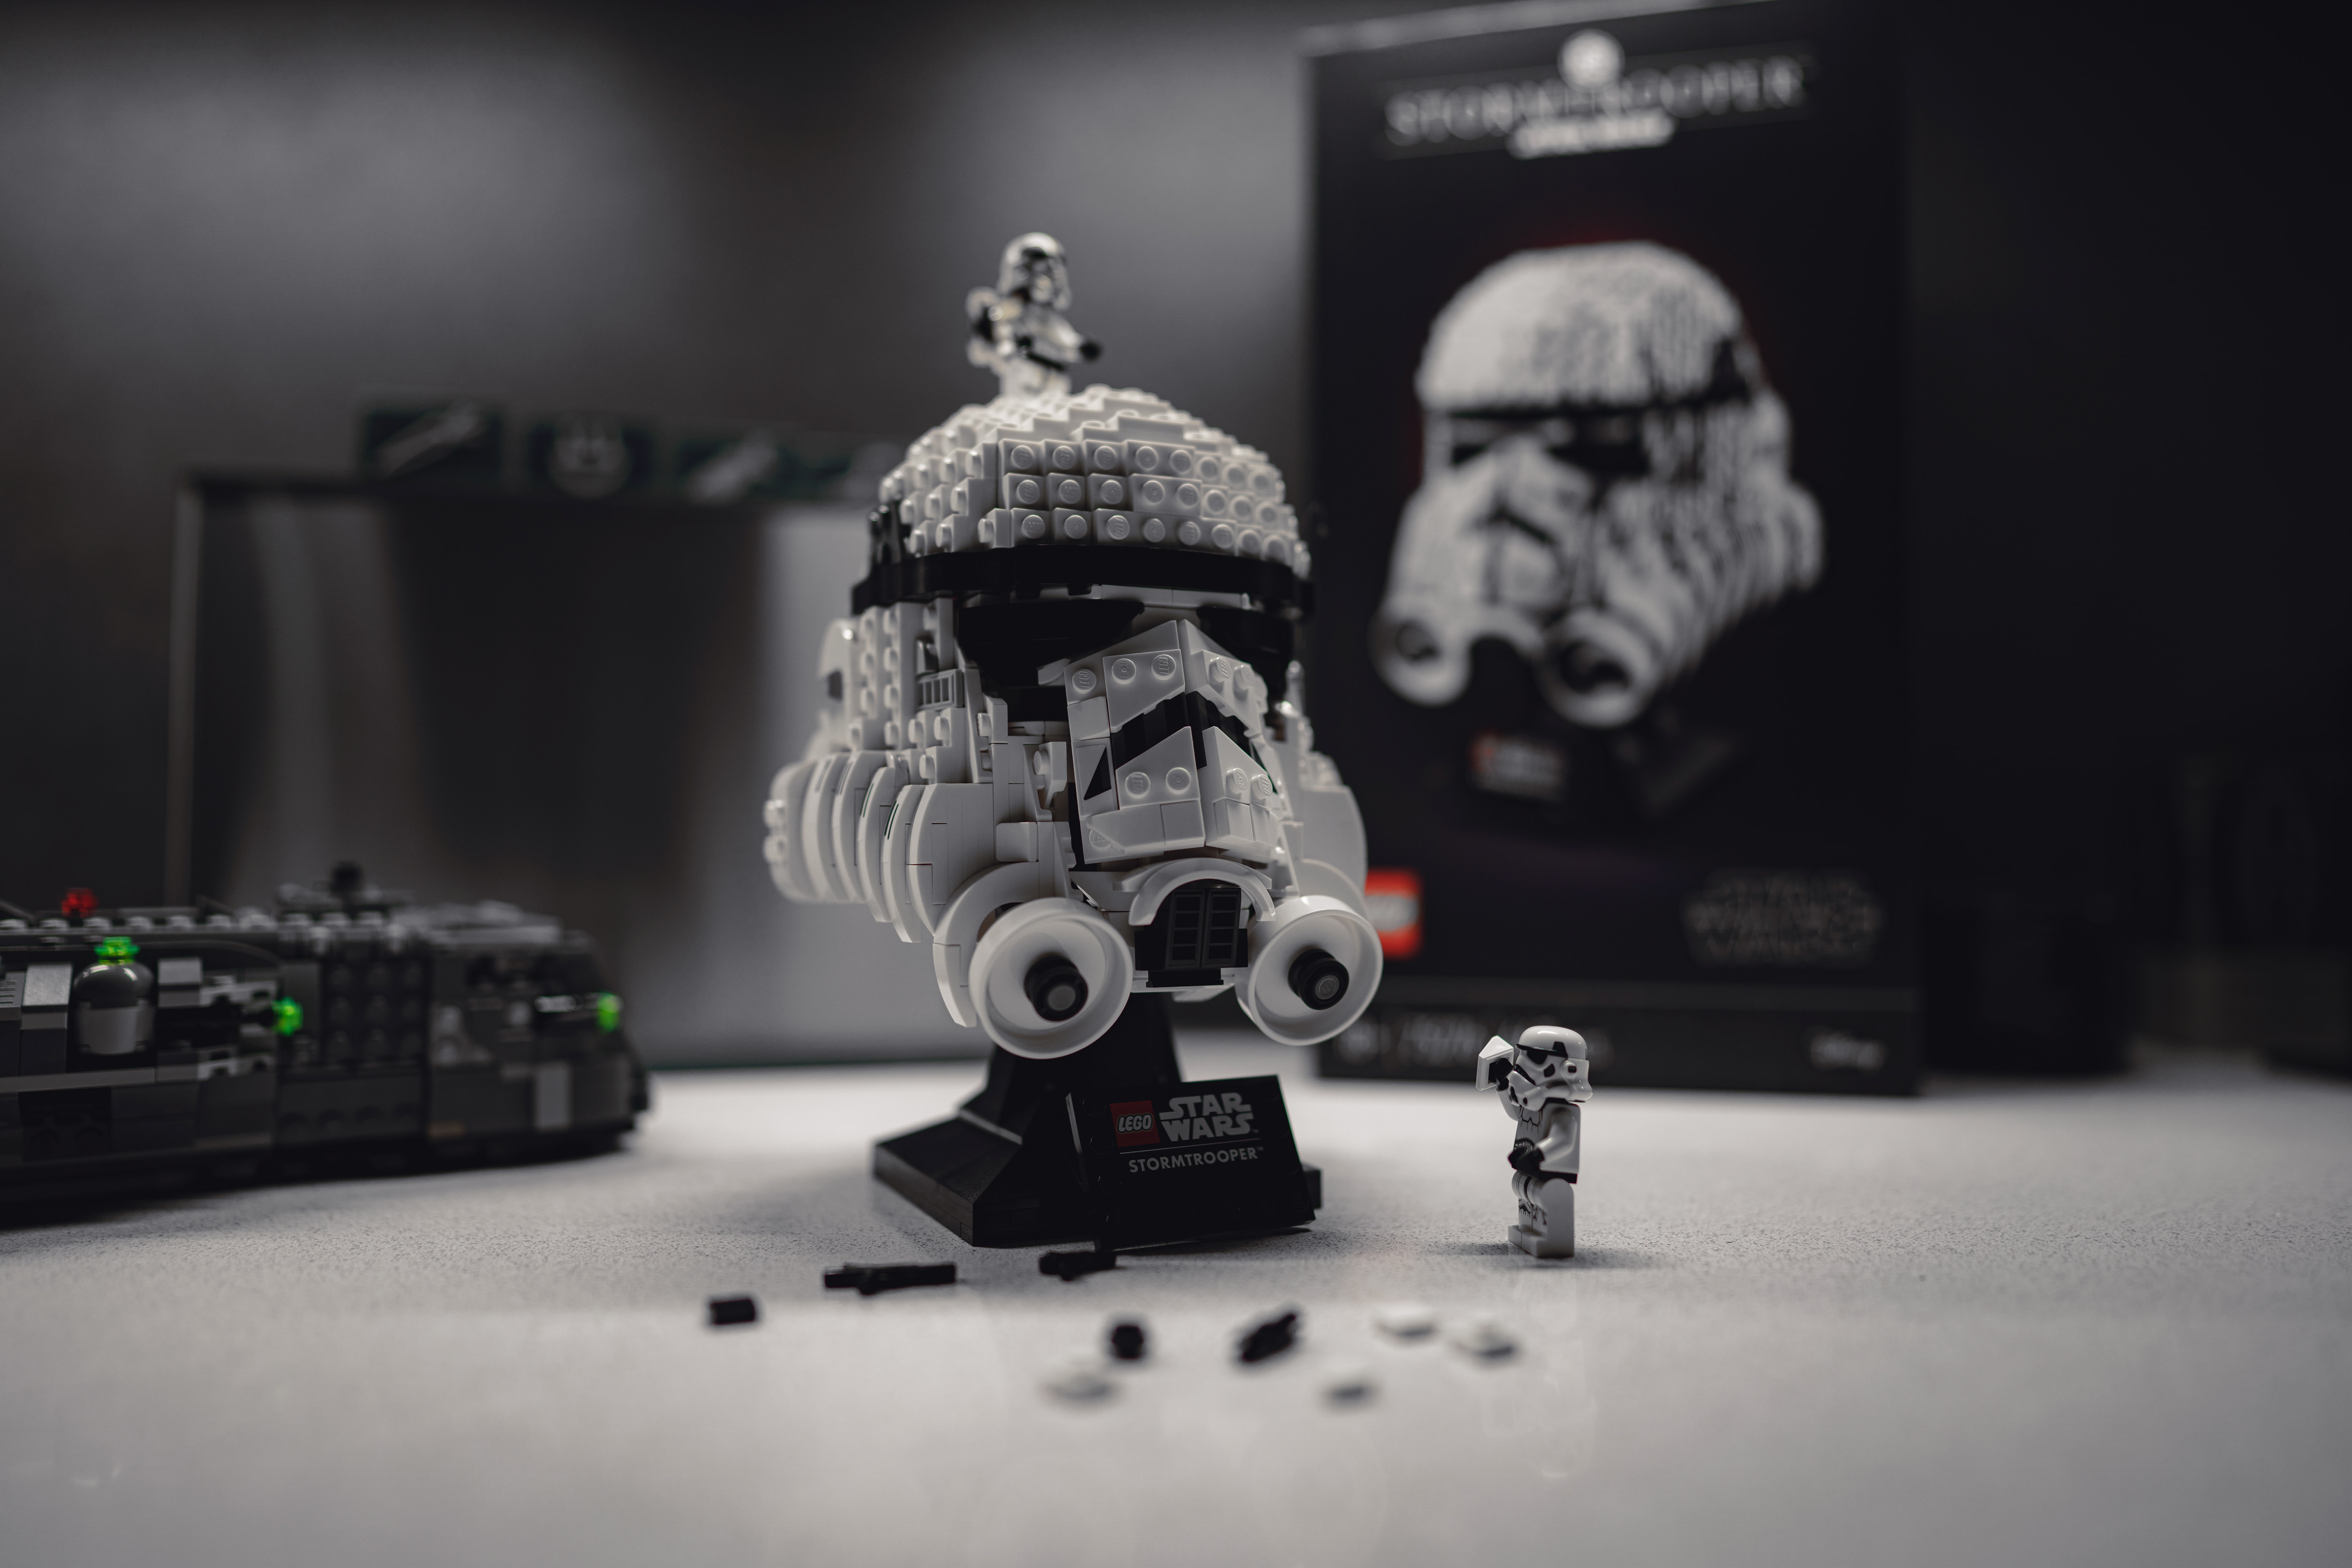 General 6000x4000 Star Wars LEGO stormtrooper monochrome